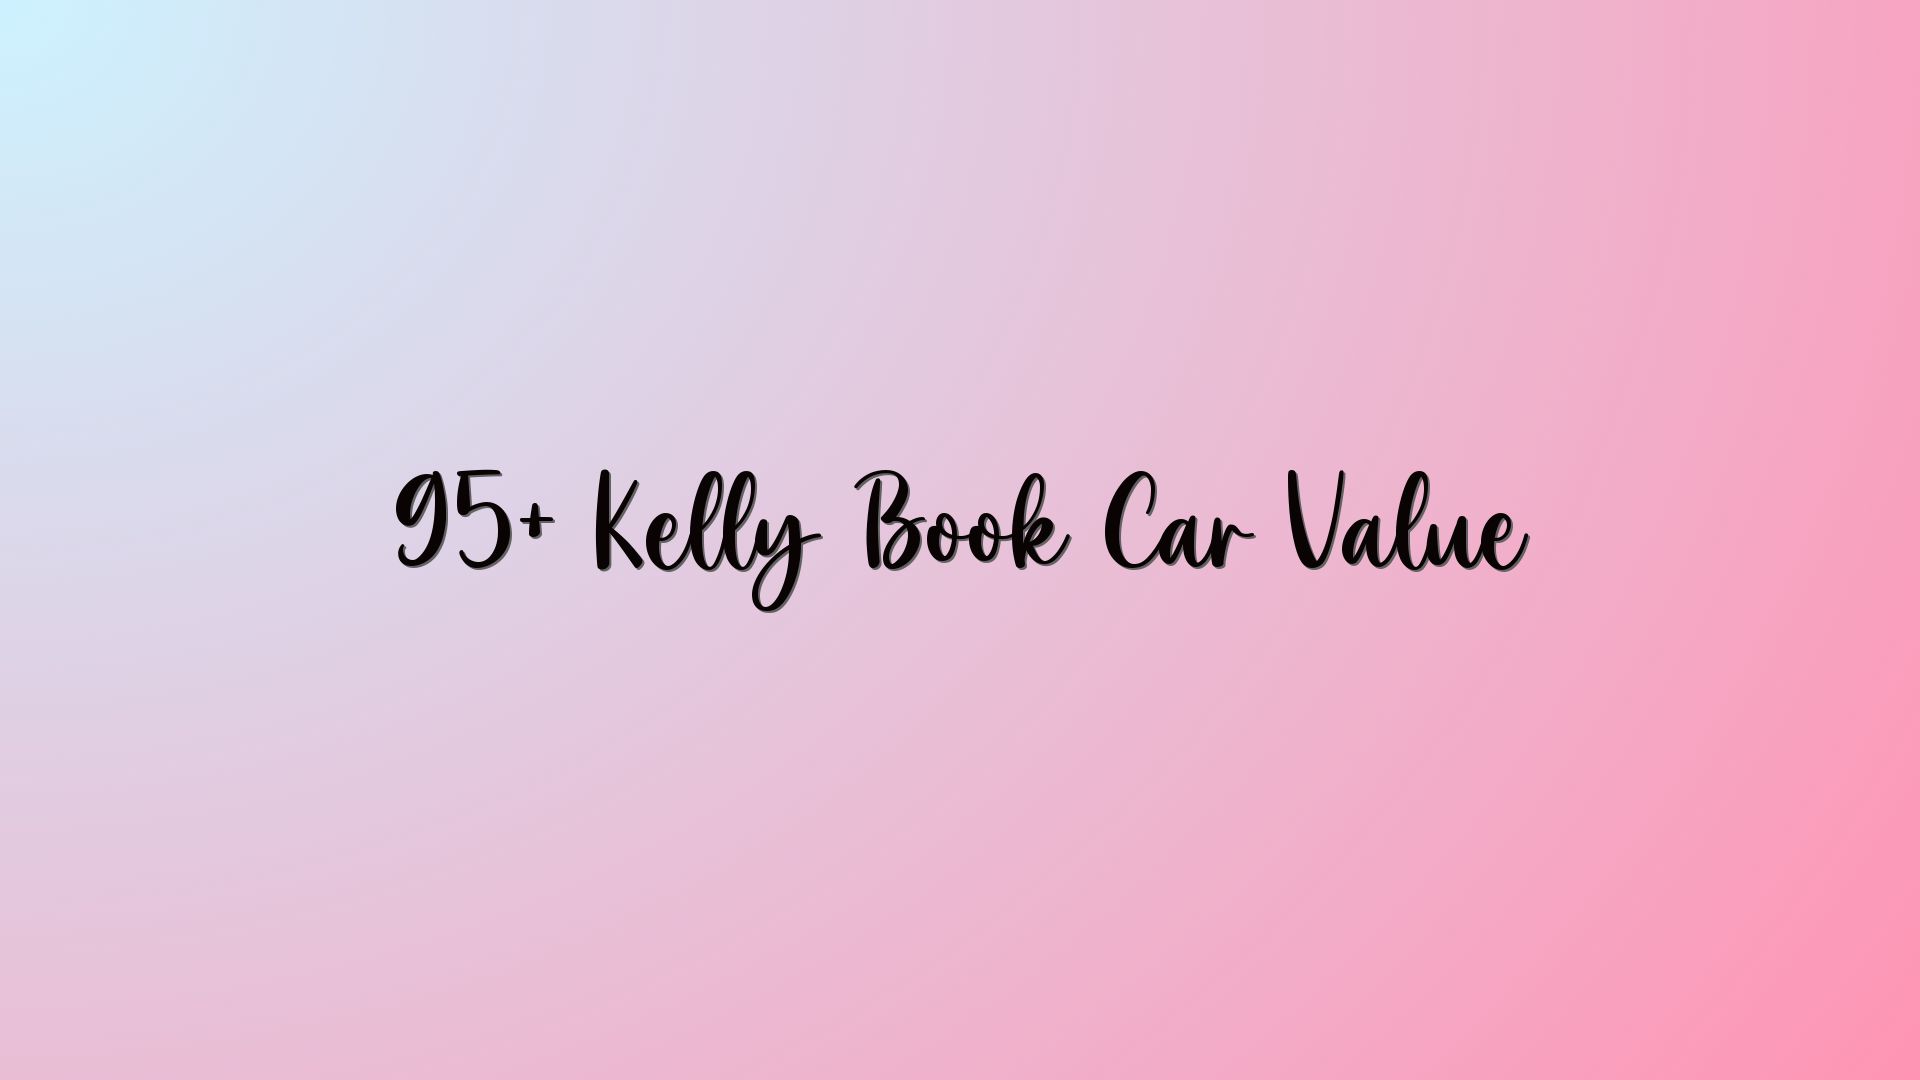 95+ Kelly Book Car Value